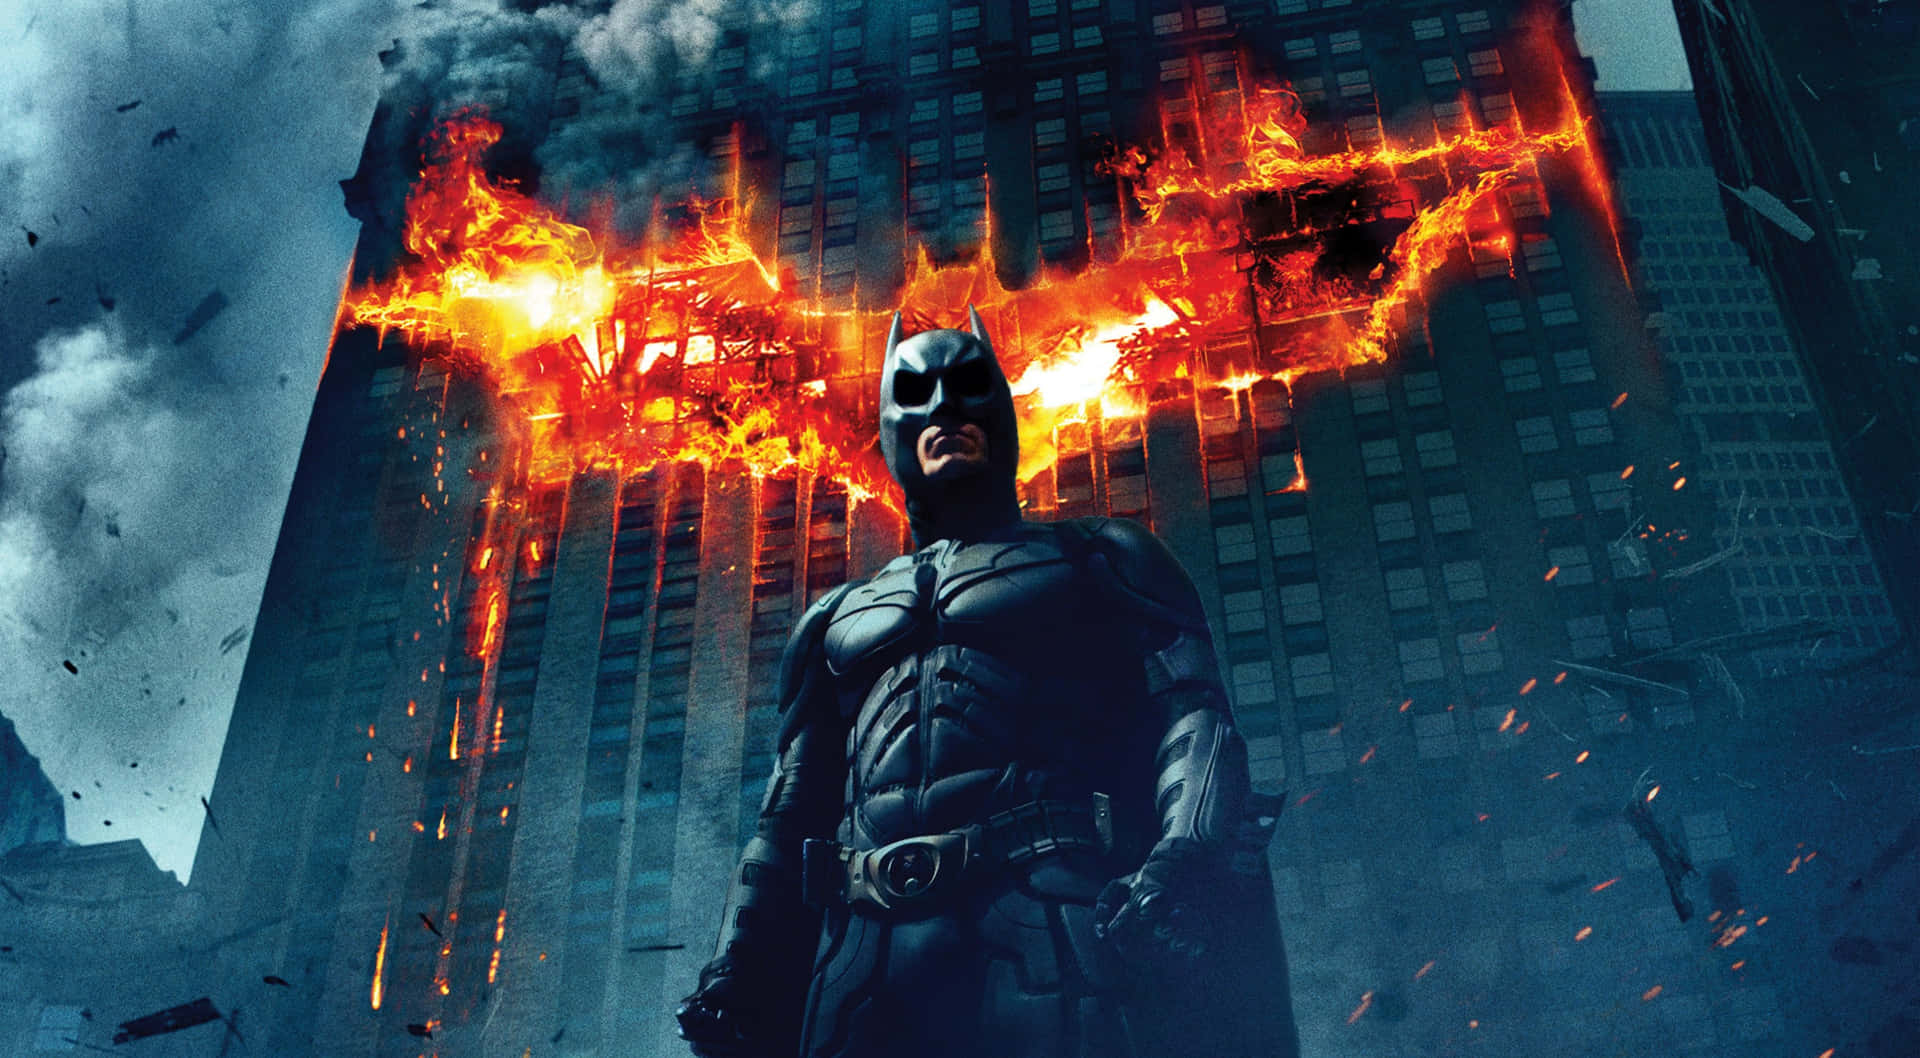 Batman Bat Logo On Fire In Building Picture